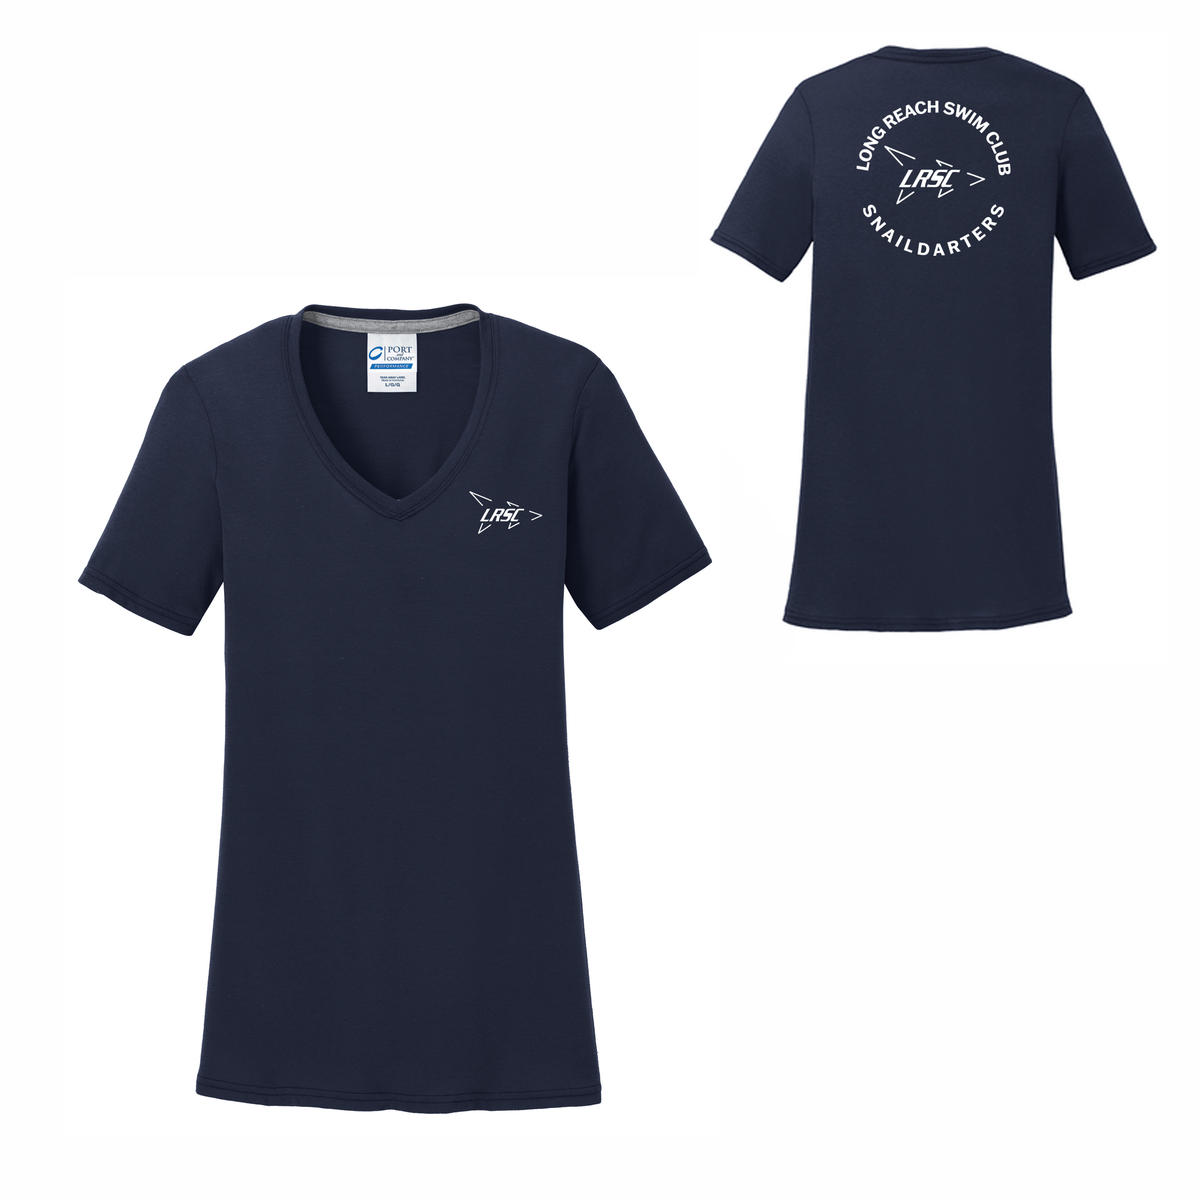 Long Reach Swim Club Women's T-Shirt